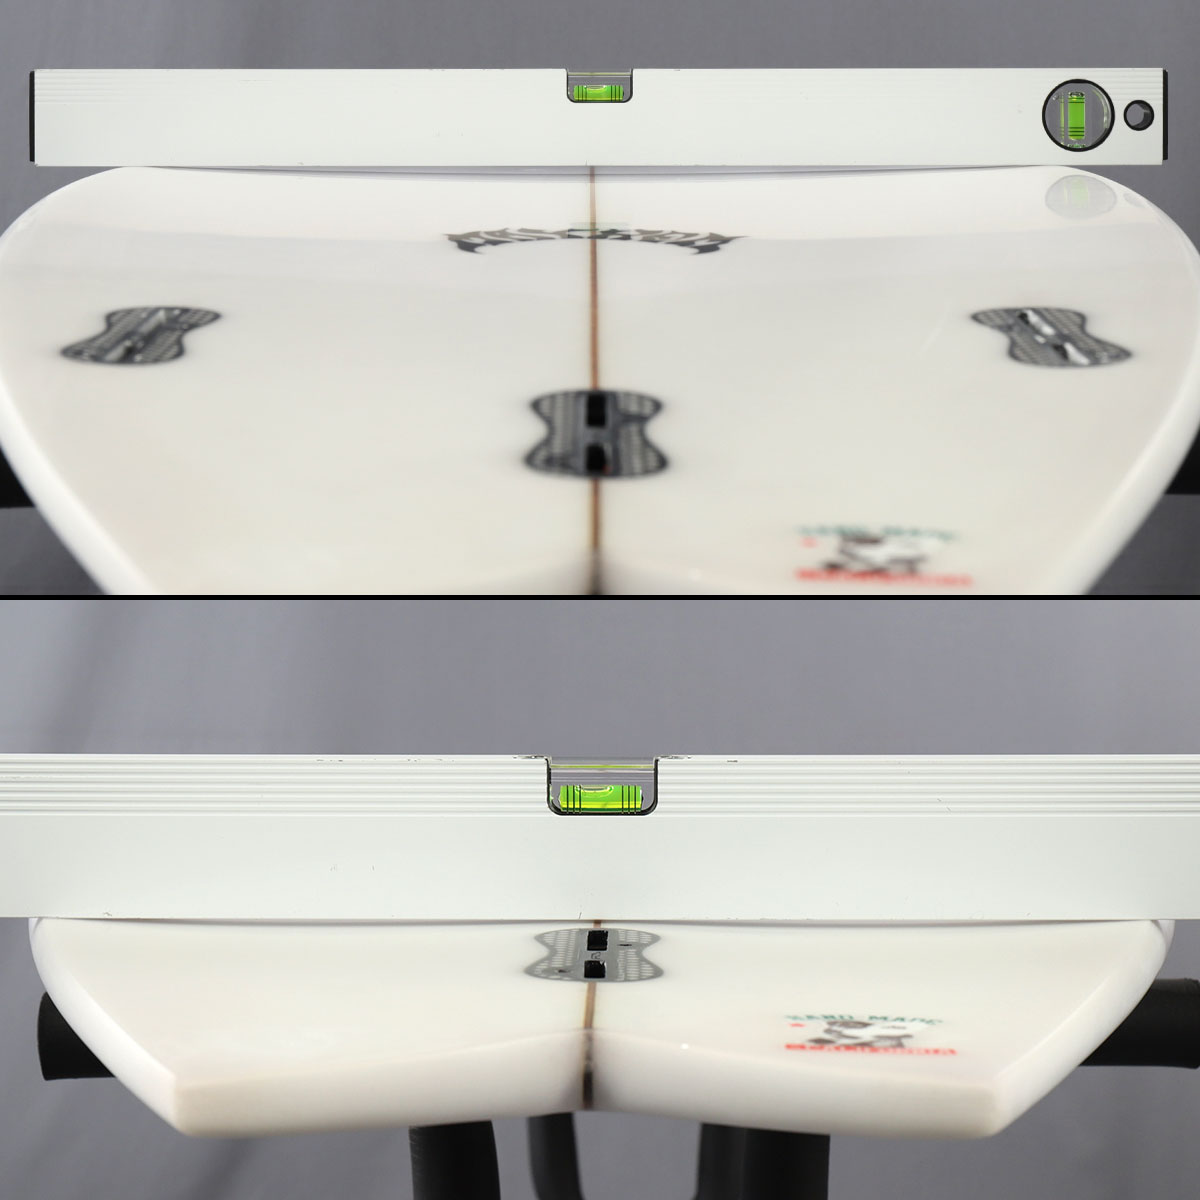 SurfBoardNet / ブランド:LOST SURFBOARDS モデル:RNF '96 CLEAR